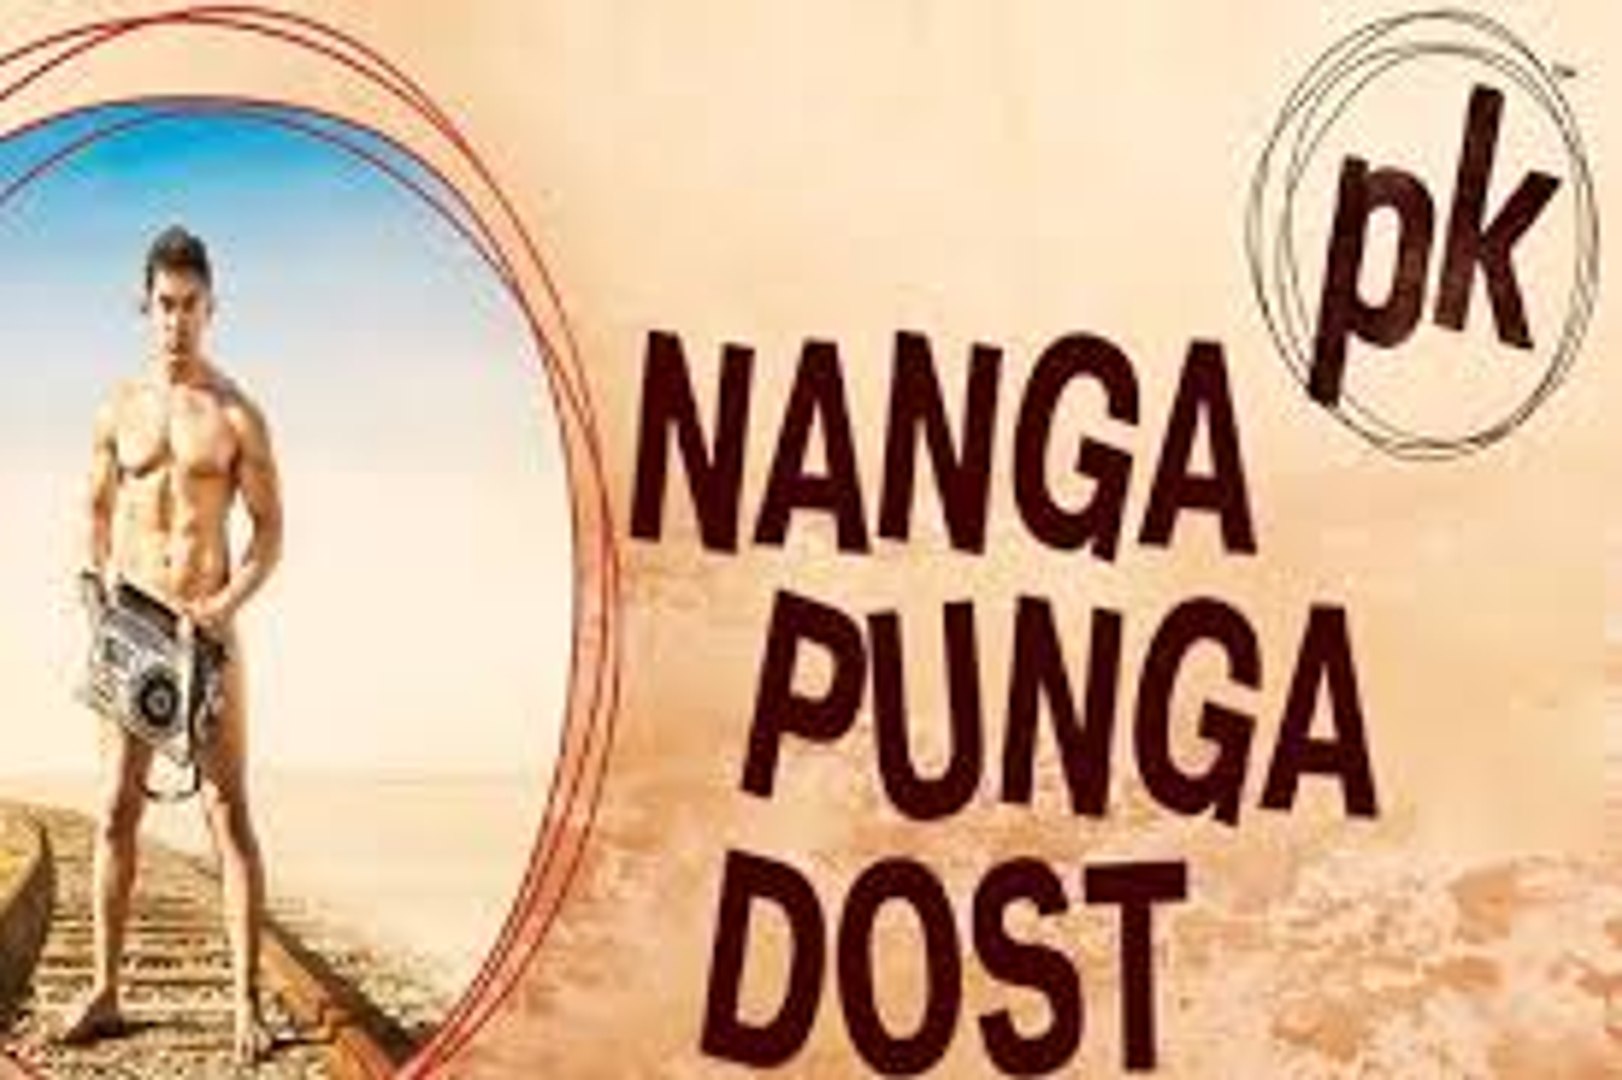 Nanga Punga Dost | Video Song HD PK - video Dailymotion